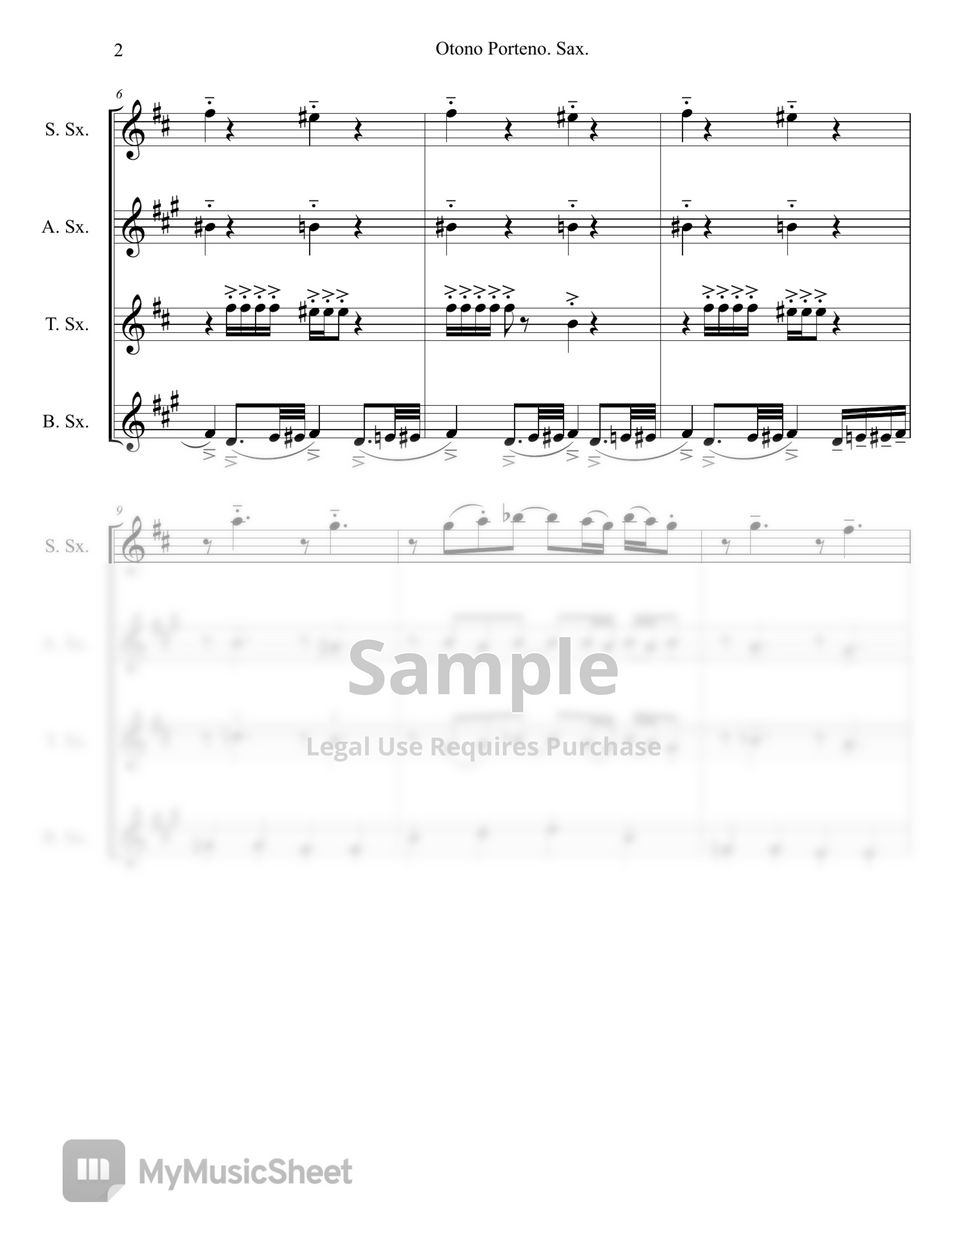 Astor Piazzolla - Otono Porteno (Saxophone Quartet) by Gwonse(Li.Se)